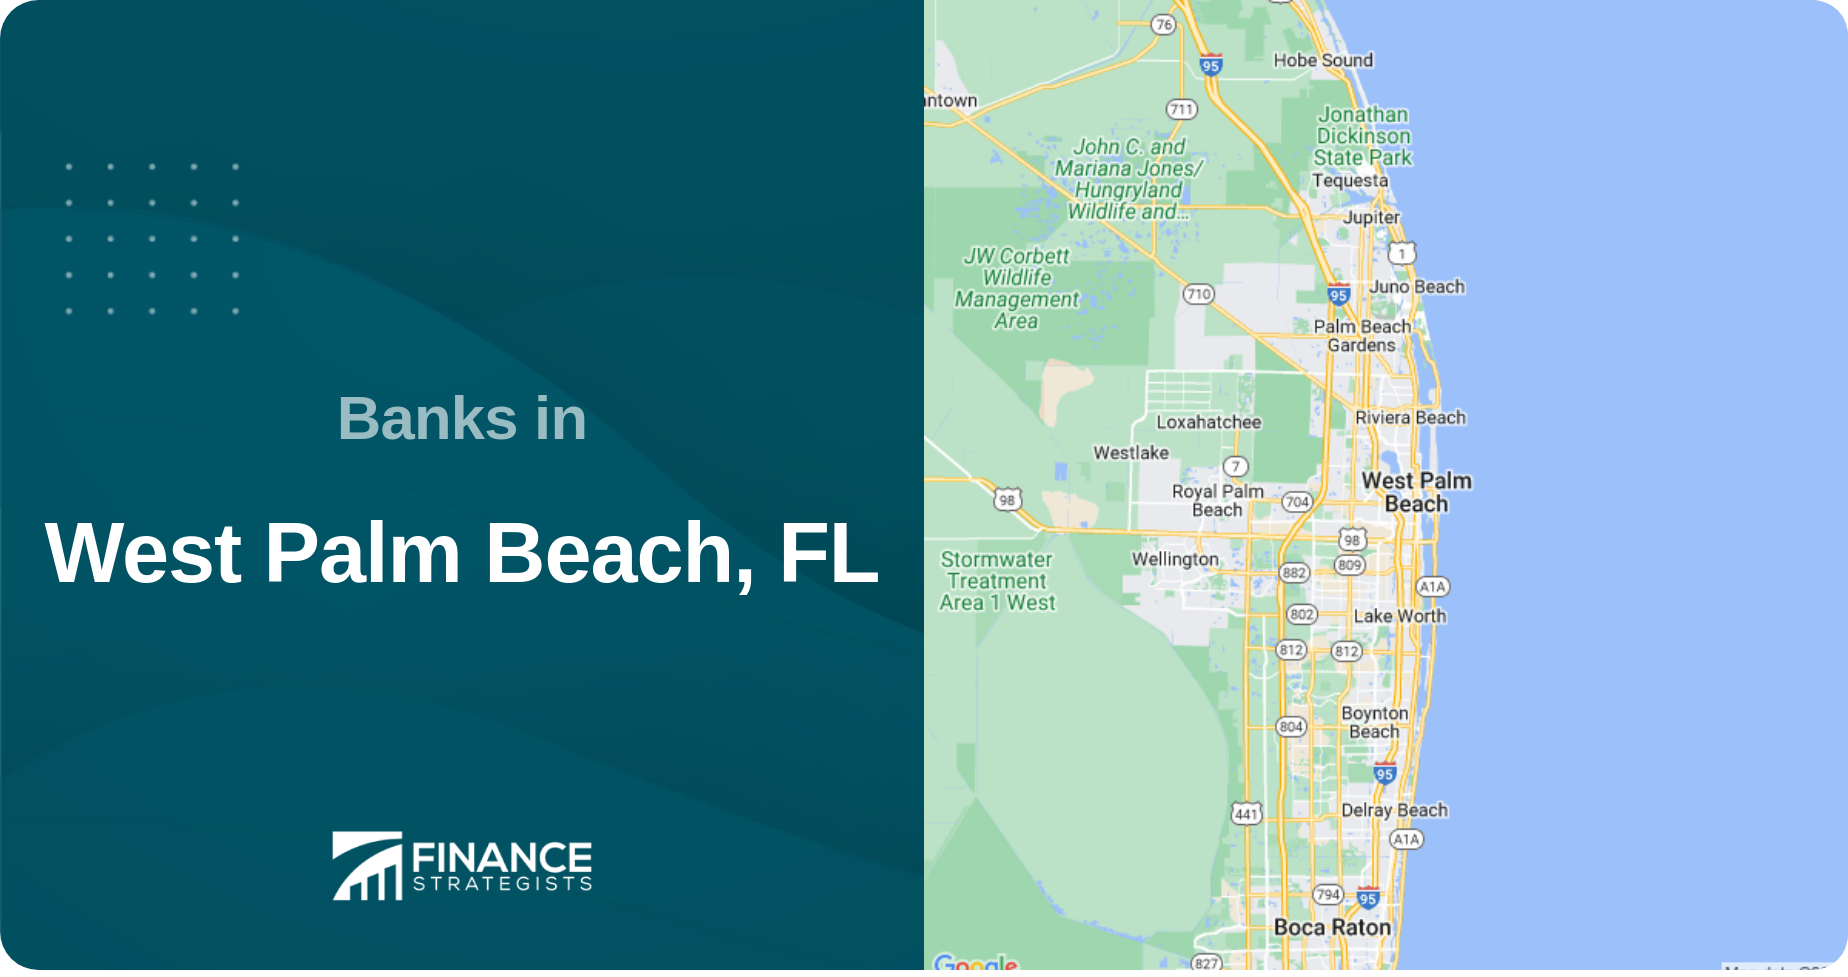 Banks in West Palm Beach, FL